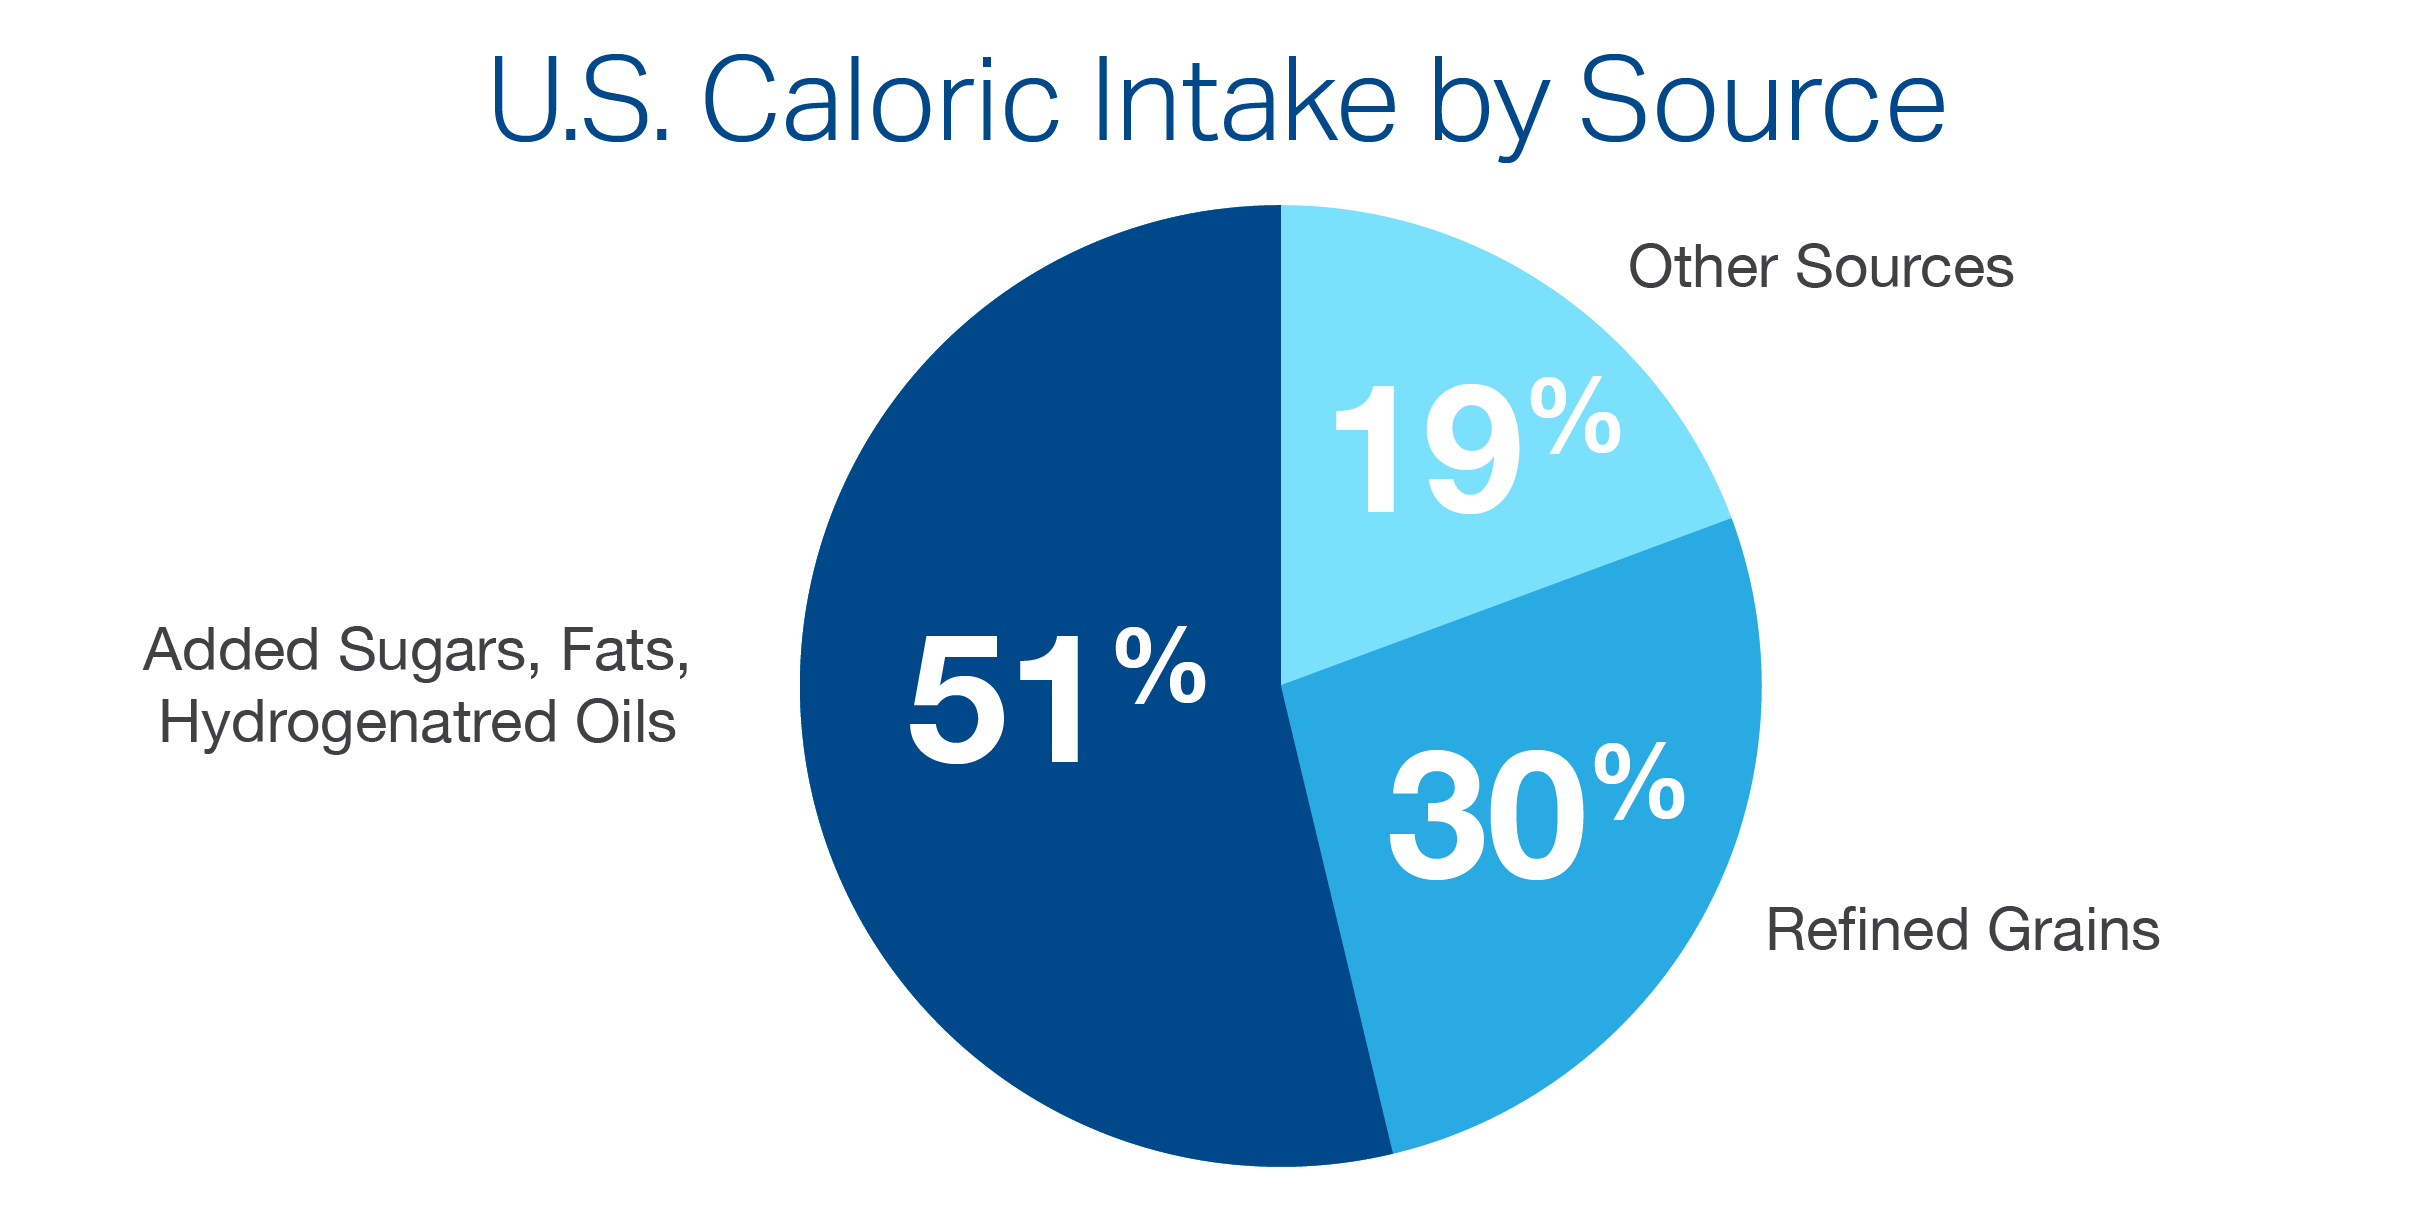 U.S. Caloric Intake by Source pie chart 